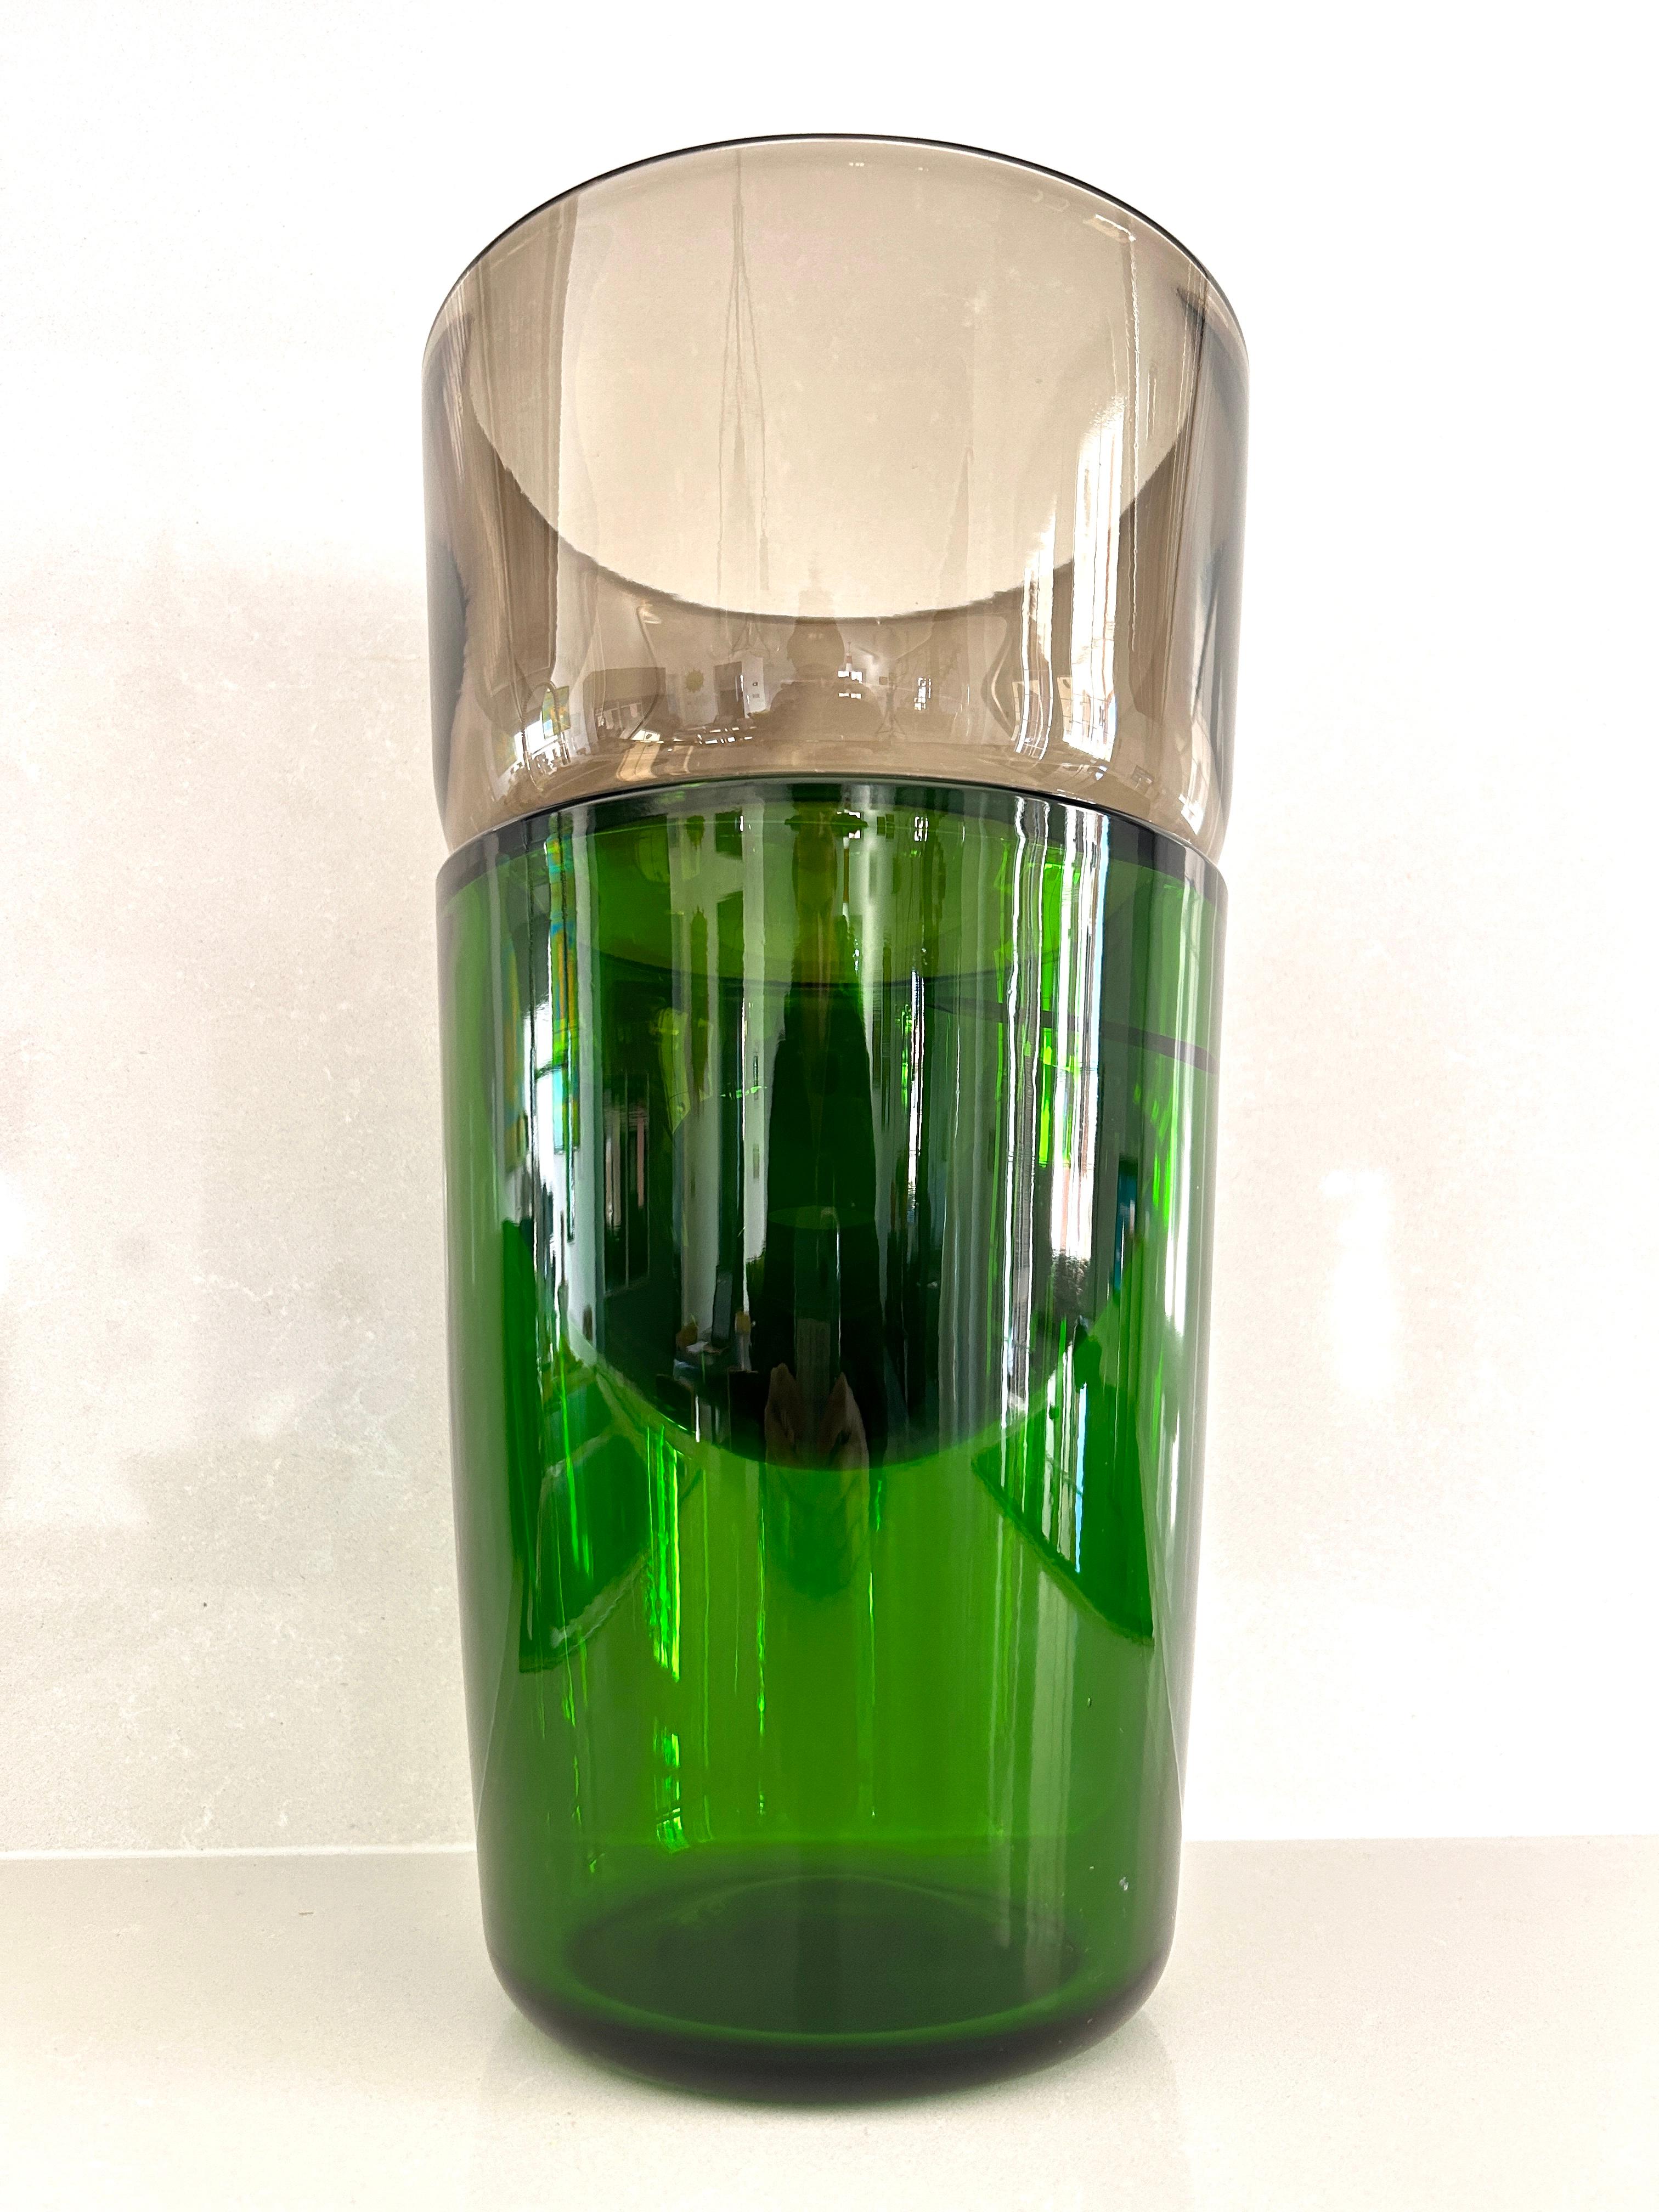 Glass Harri Koskinen 'Cosmos' vase, 2010 for Venini Italia